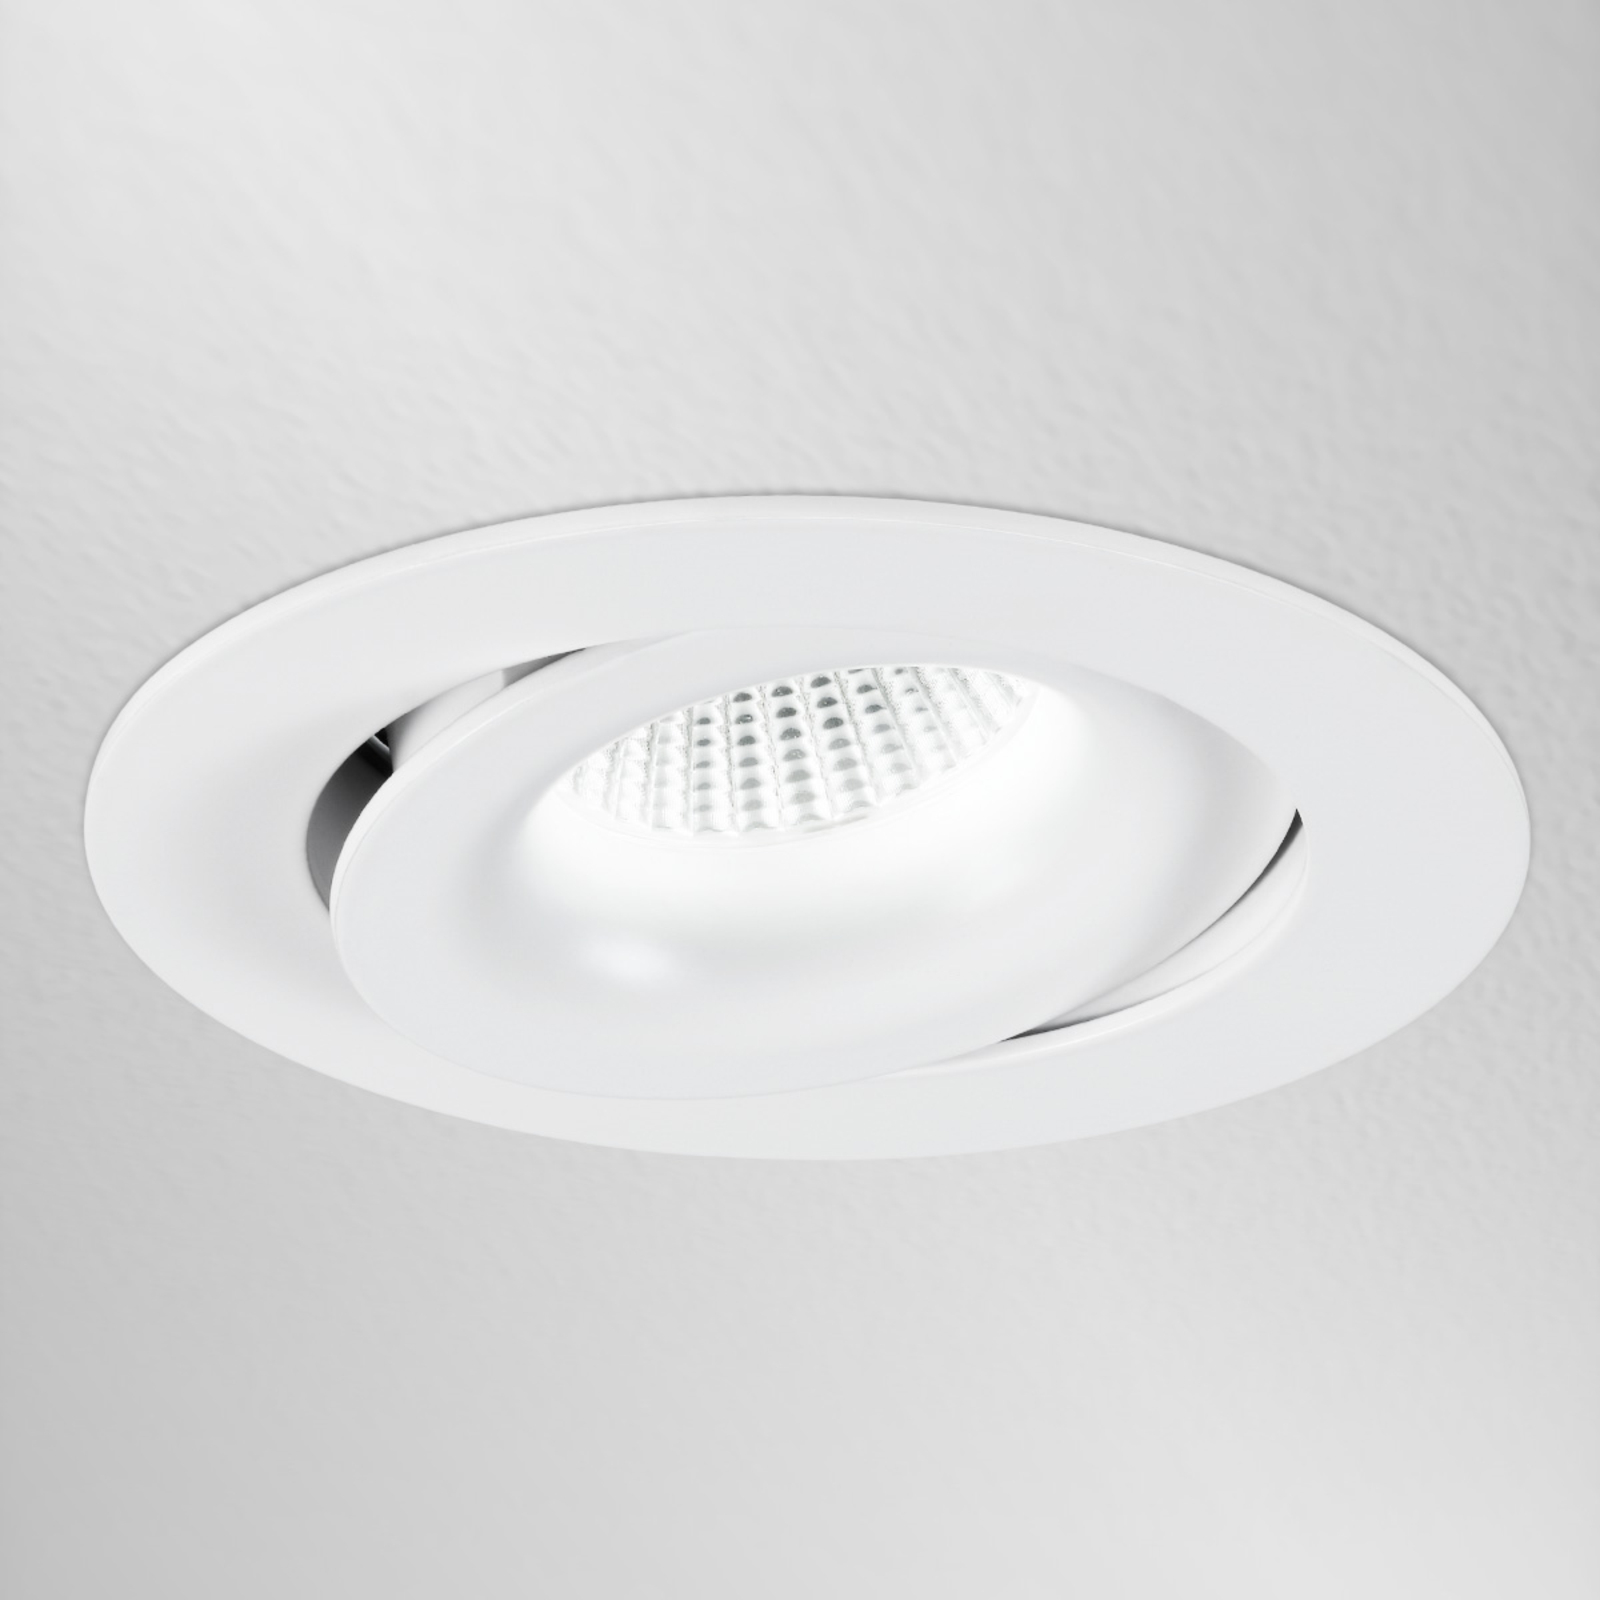 Round LED recessed spotlight MK 110